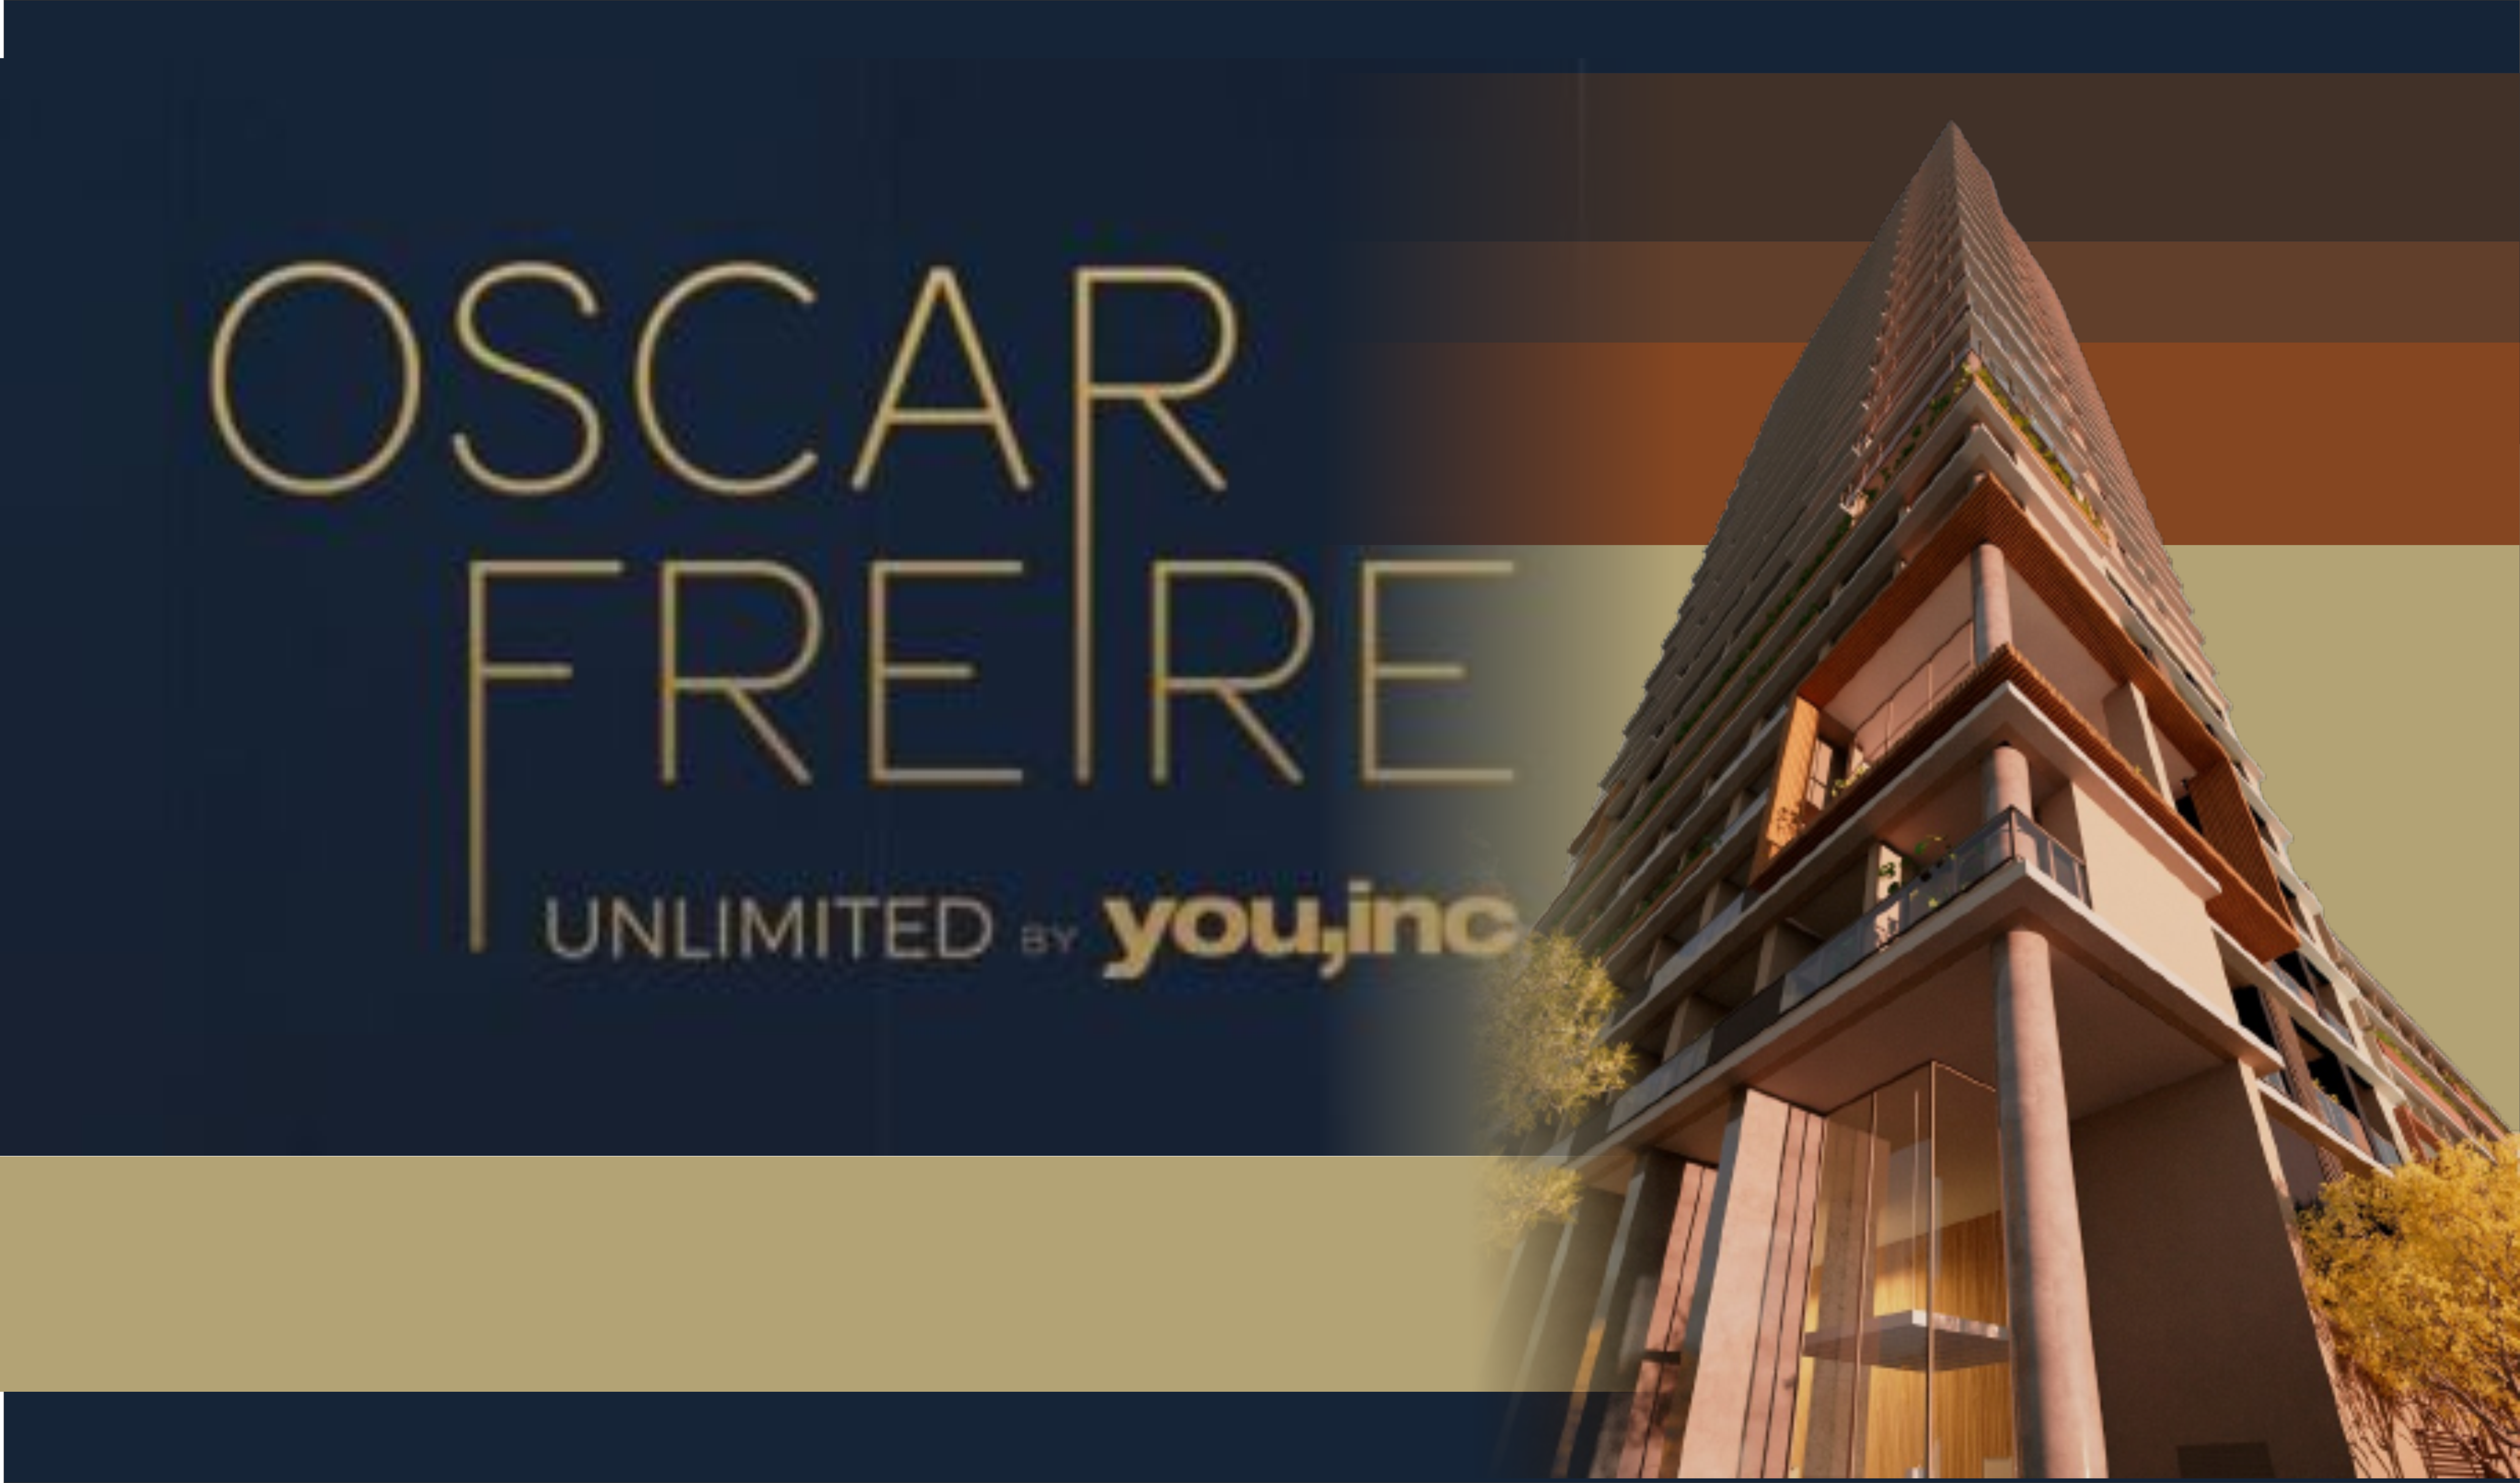 Un Limited Oscar Freire by You inc Logo